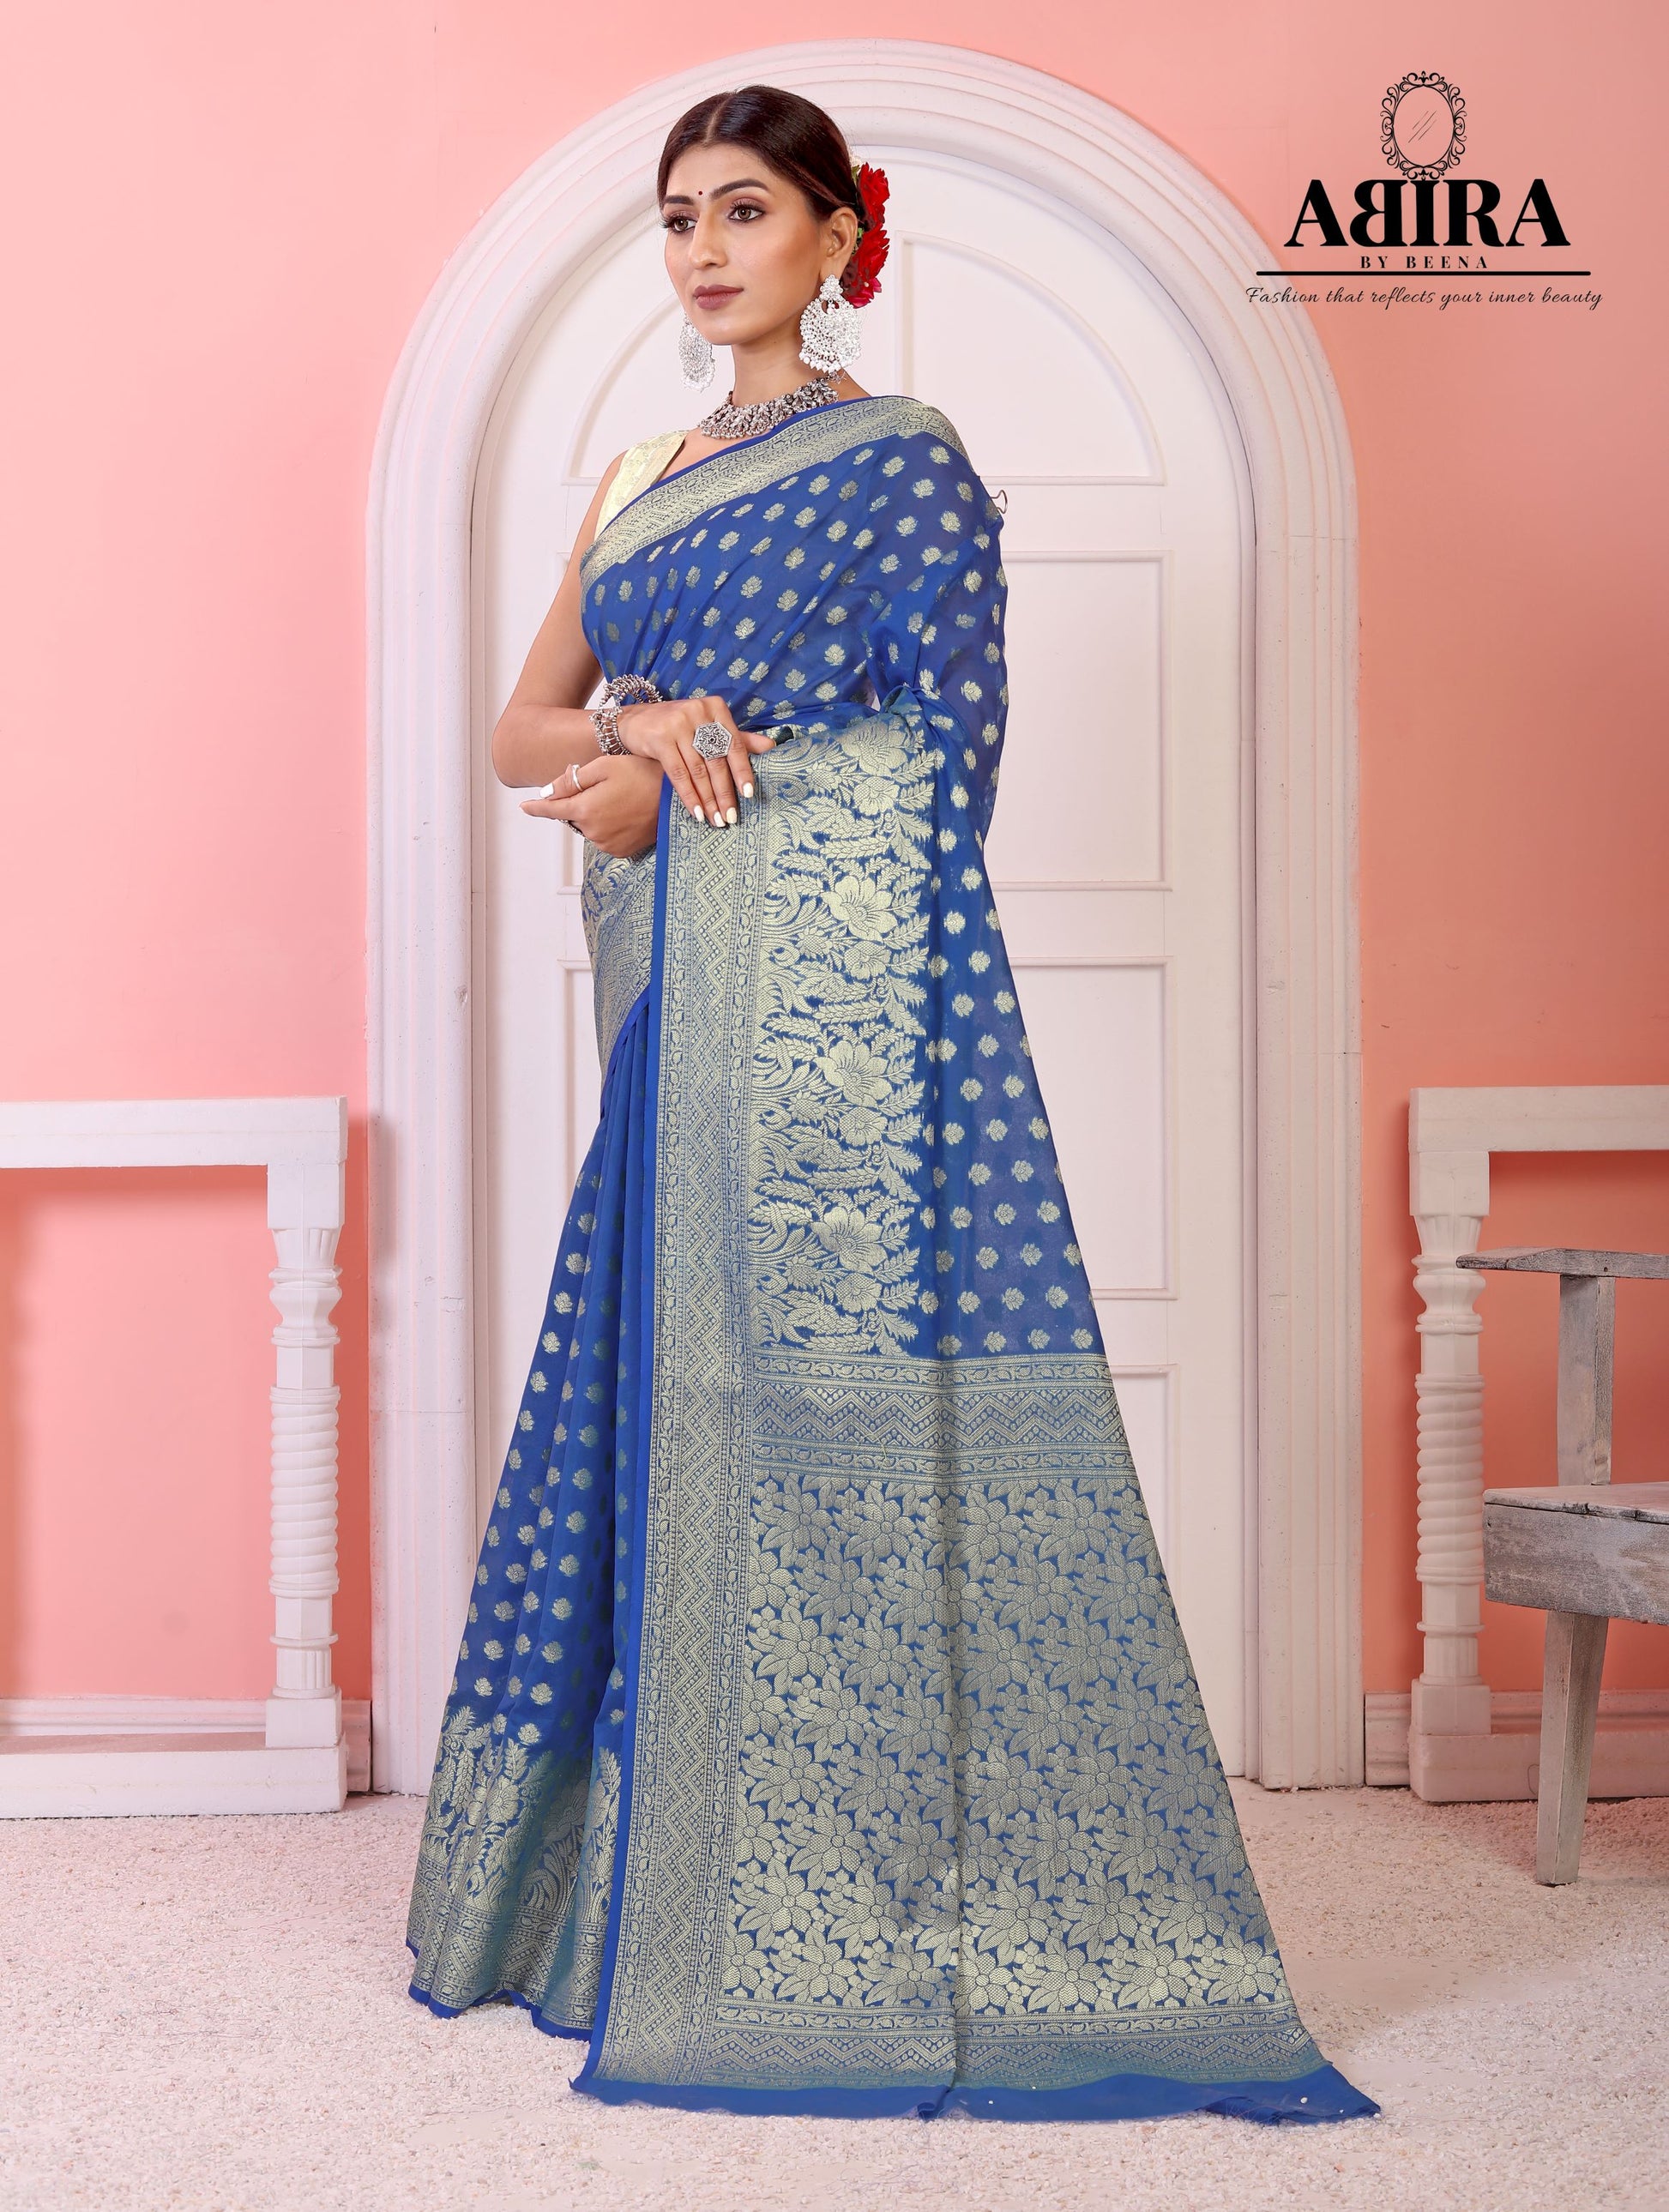 Blue Banaras Soft Georgette Silk - AbirabyBeena